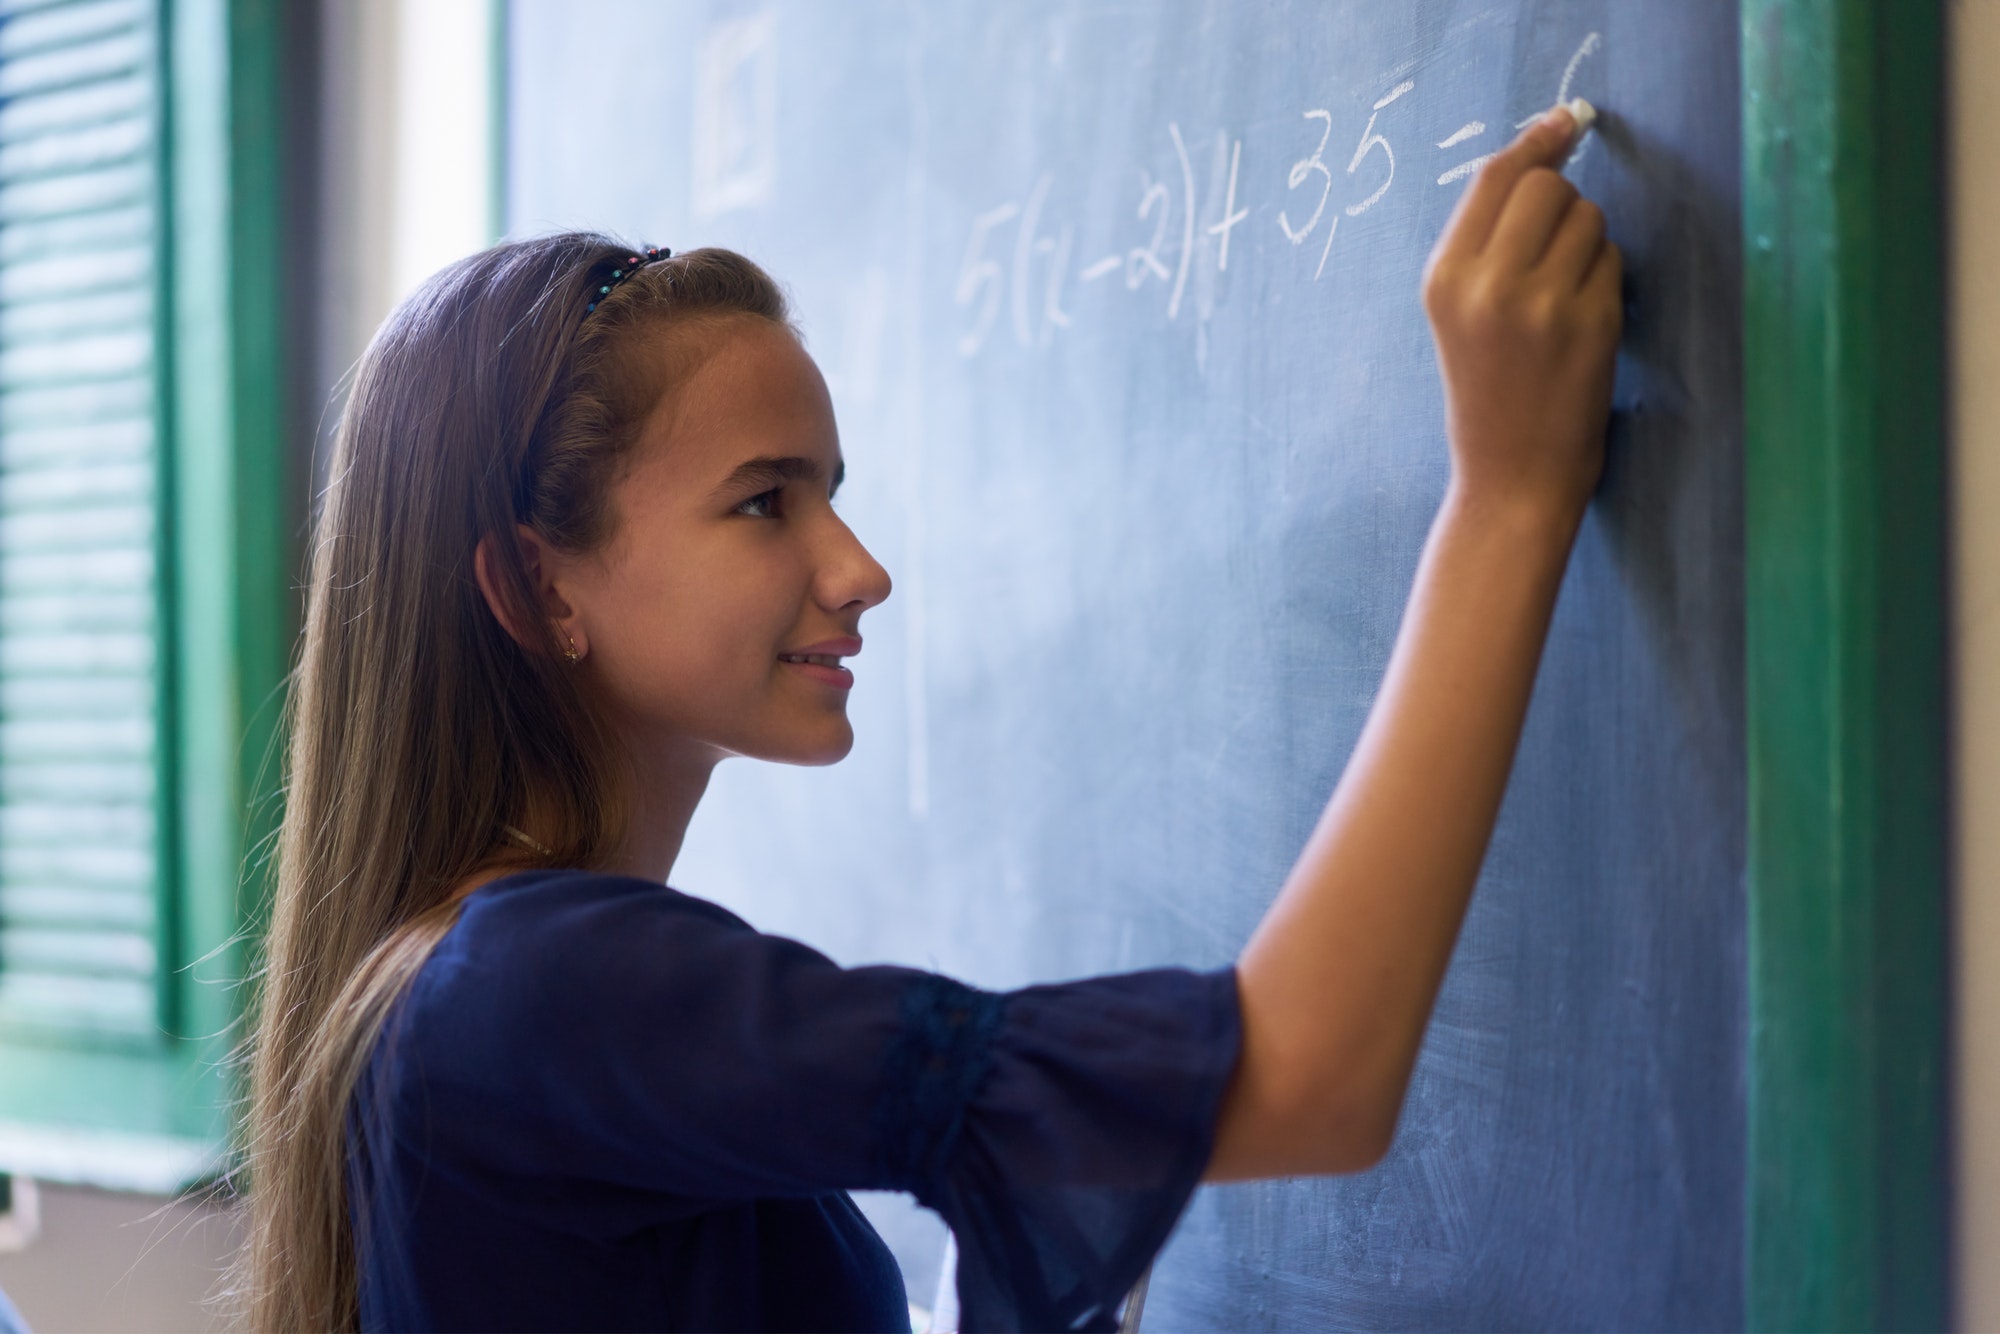 Girl Doing Math Exercise At Blackboard In High School Class